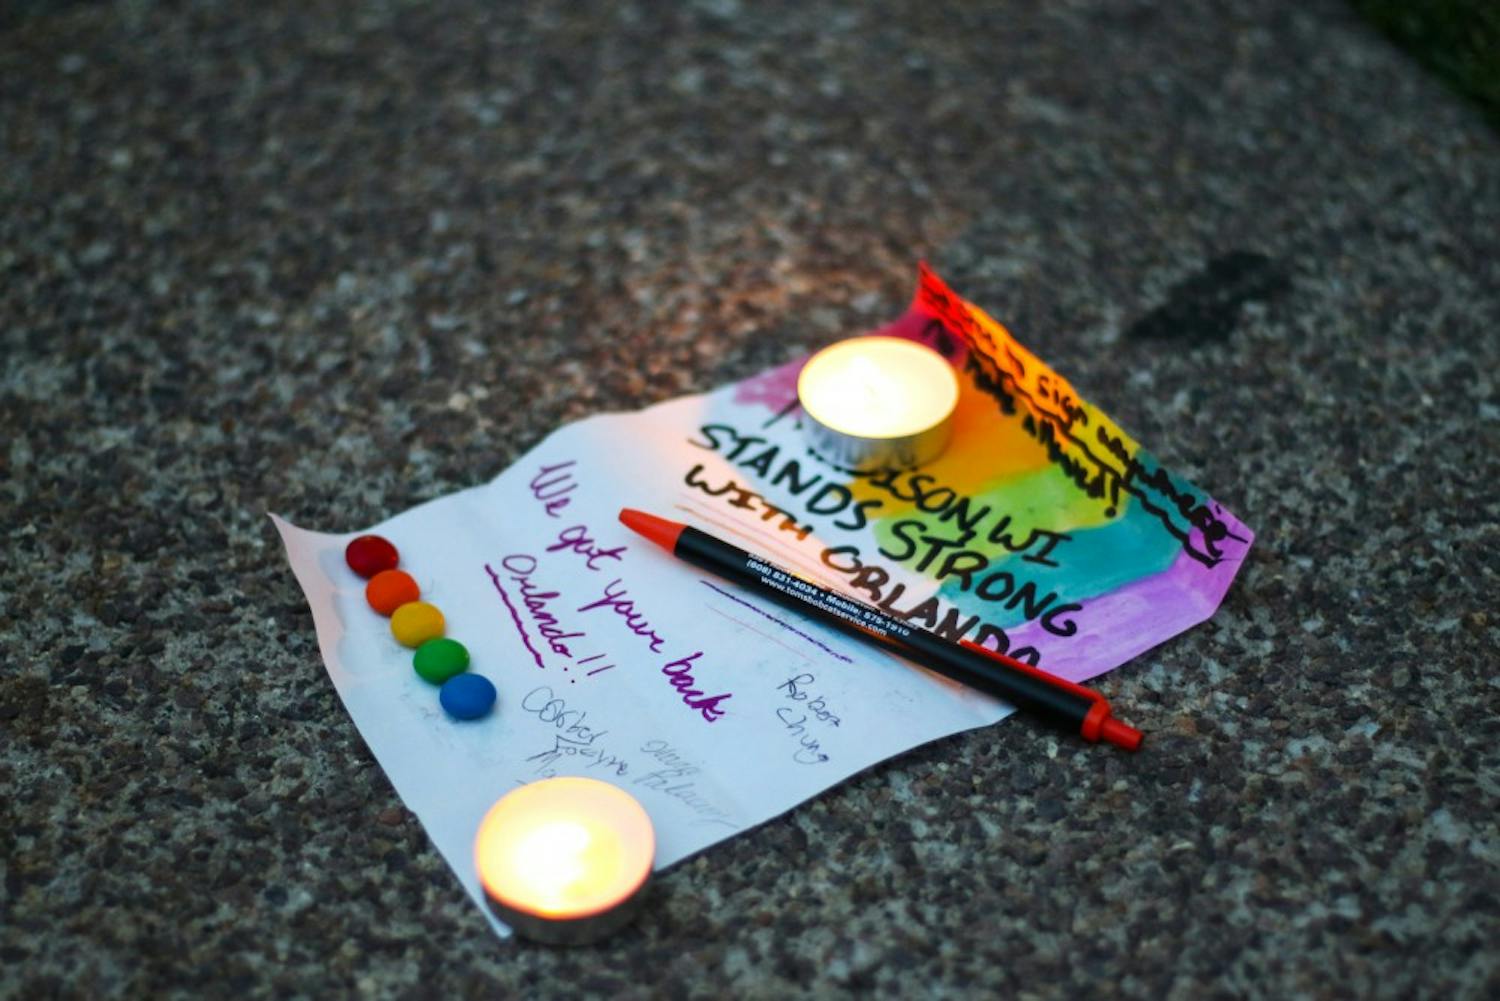 Orlando Mass Shooting Vigils